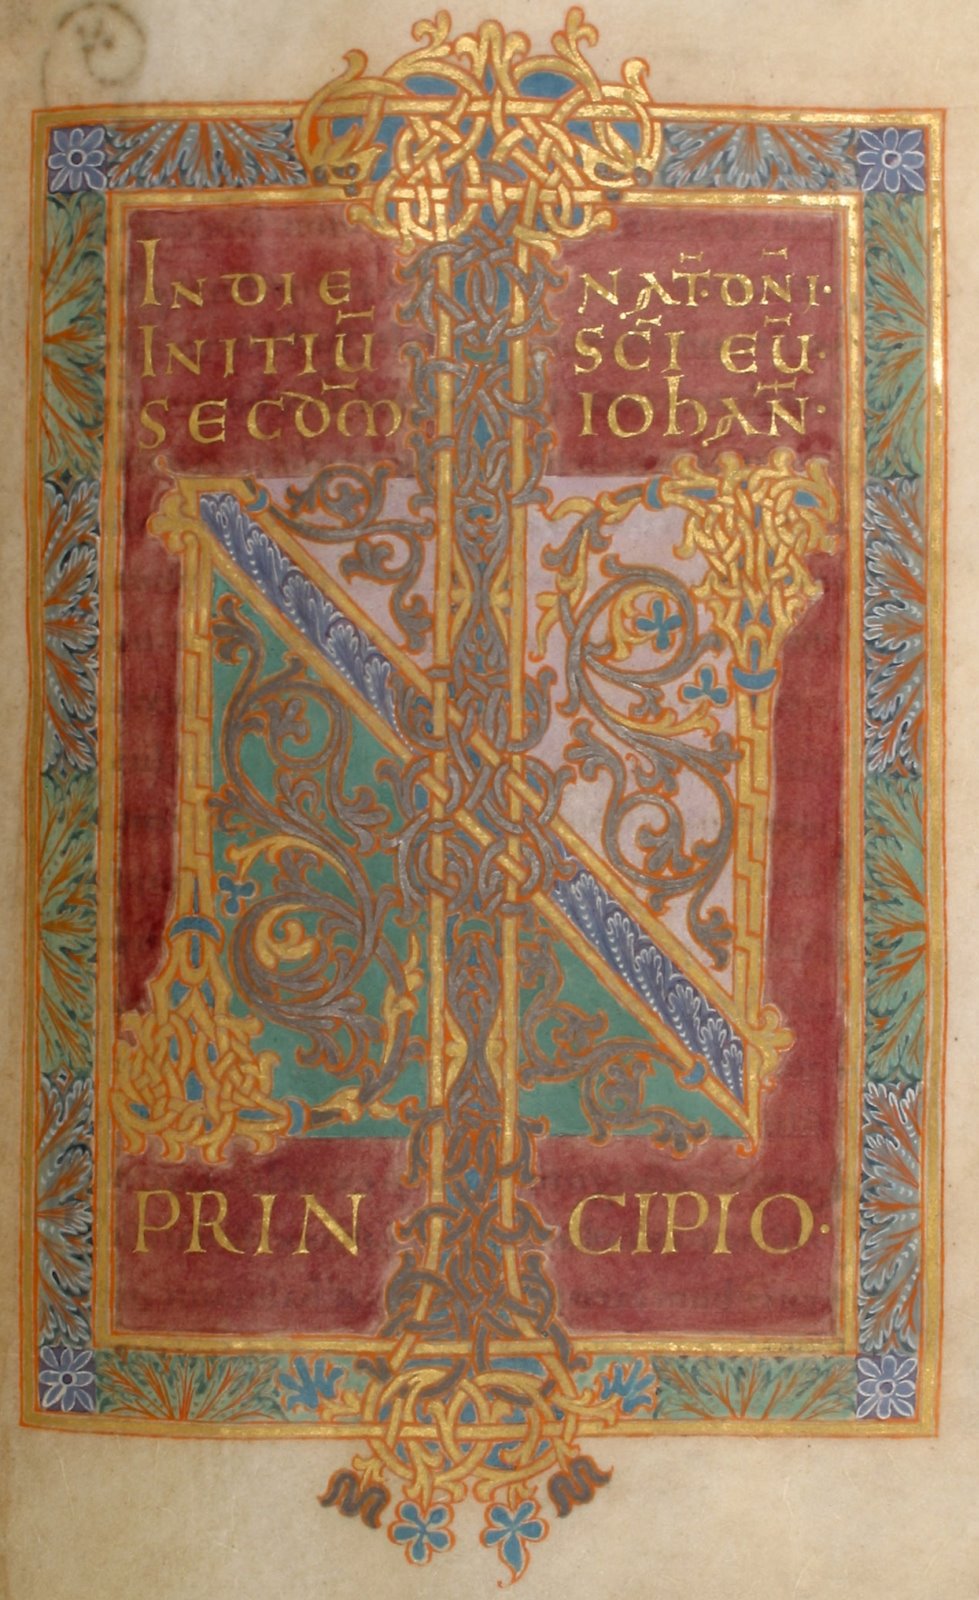 10th century gospels in illuminated manuscript (letter N)